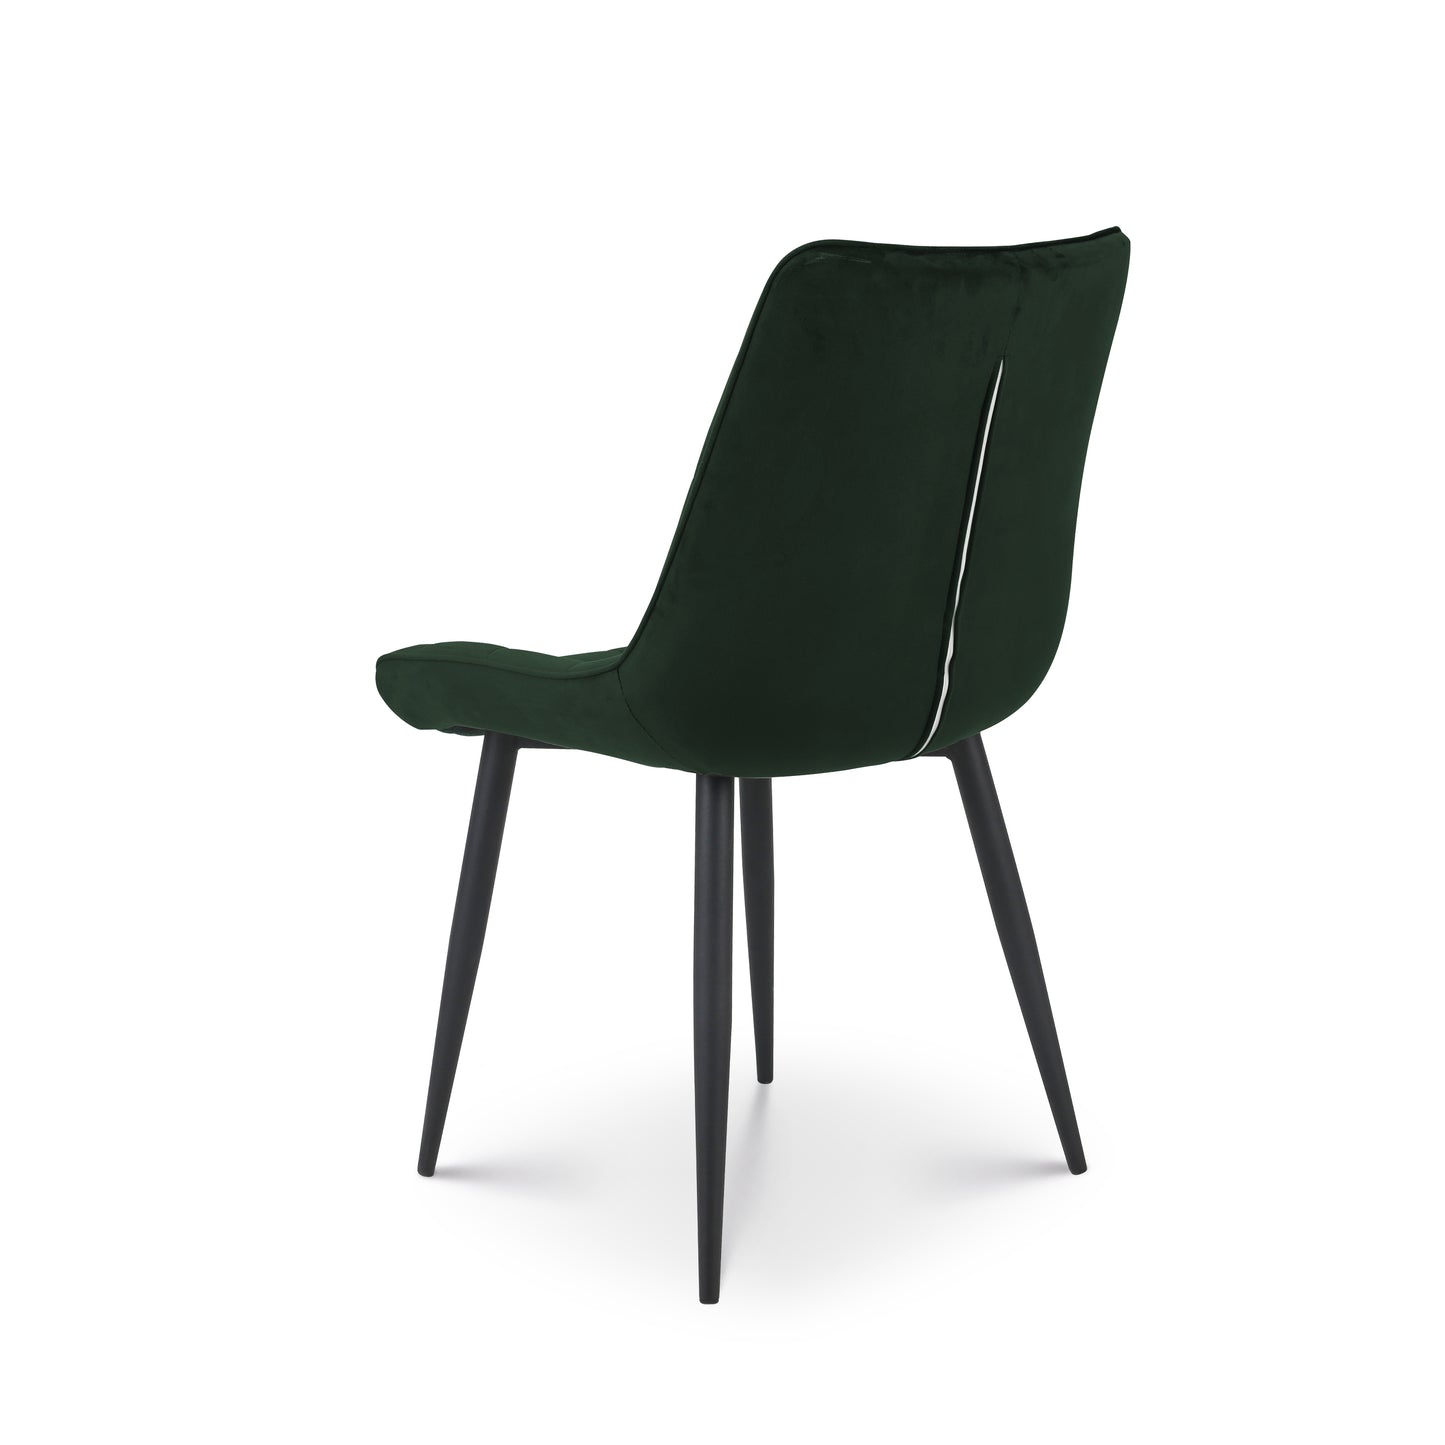 Chaise Moderne en Tissu Velours Vert Foncé avec Pieds en Métal